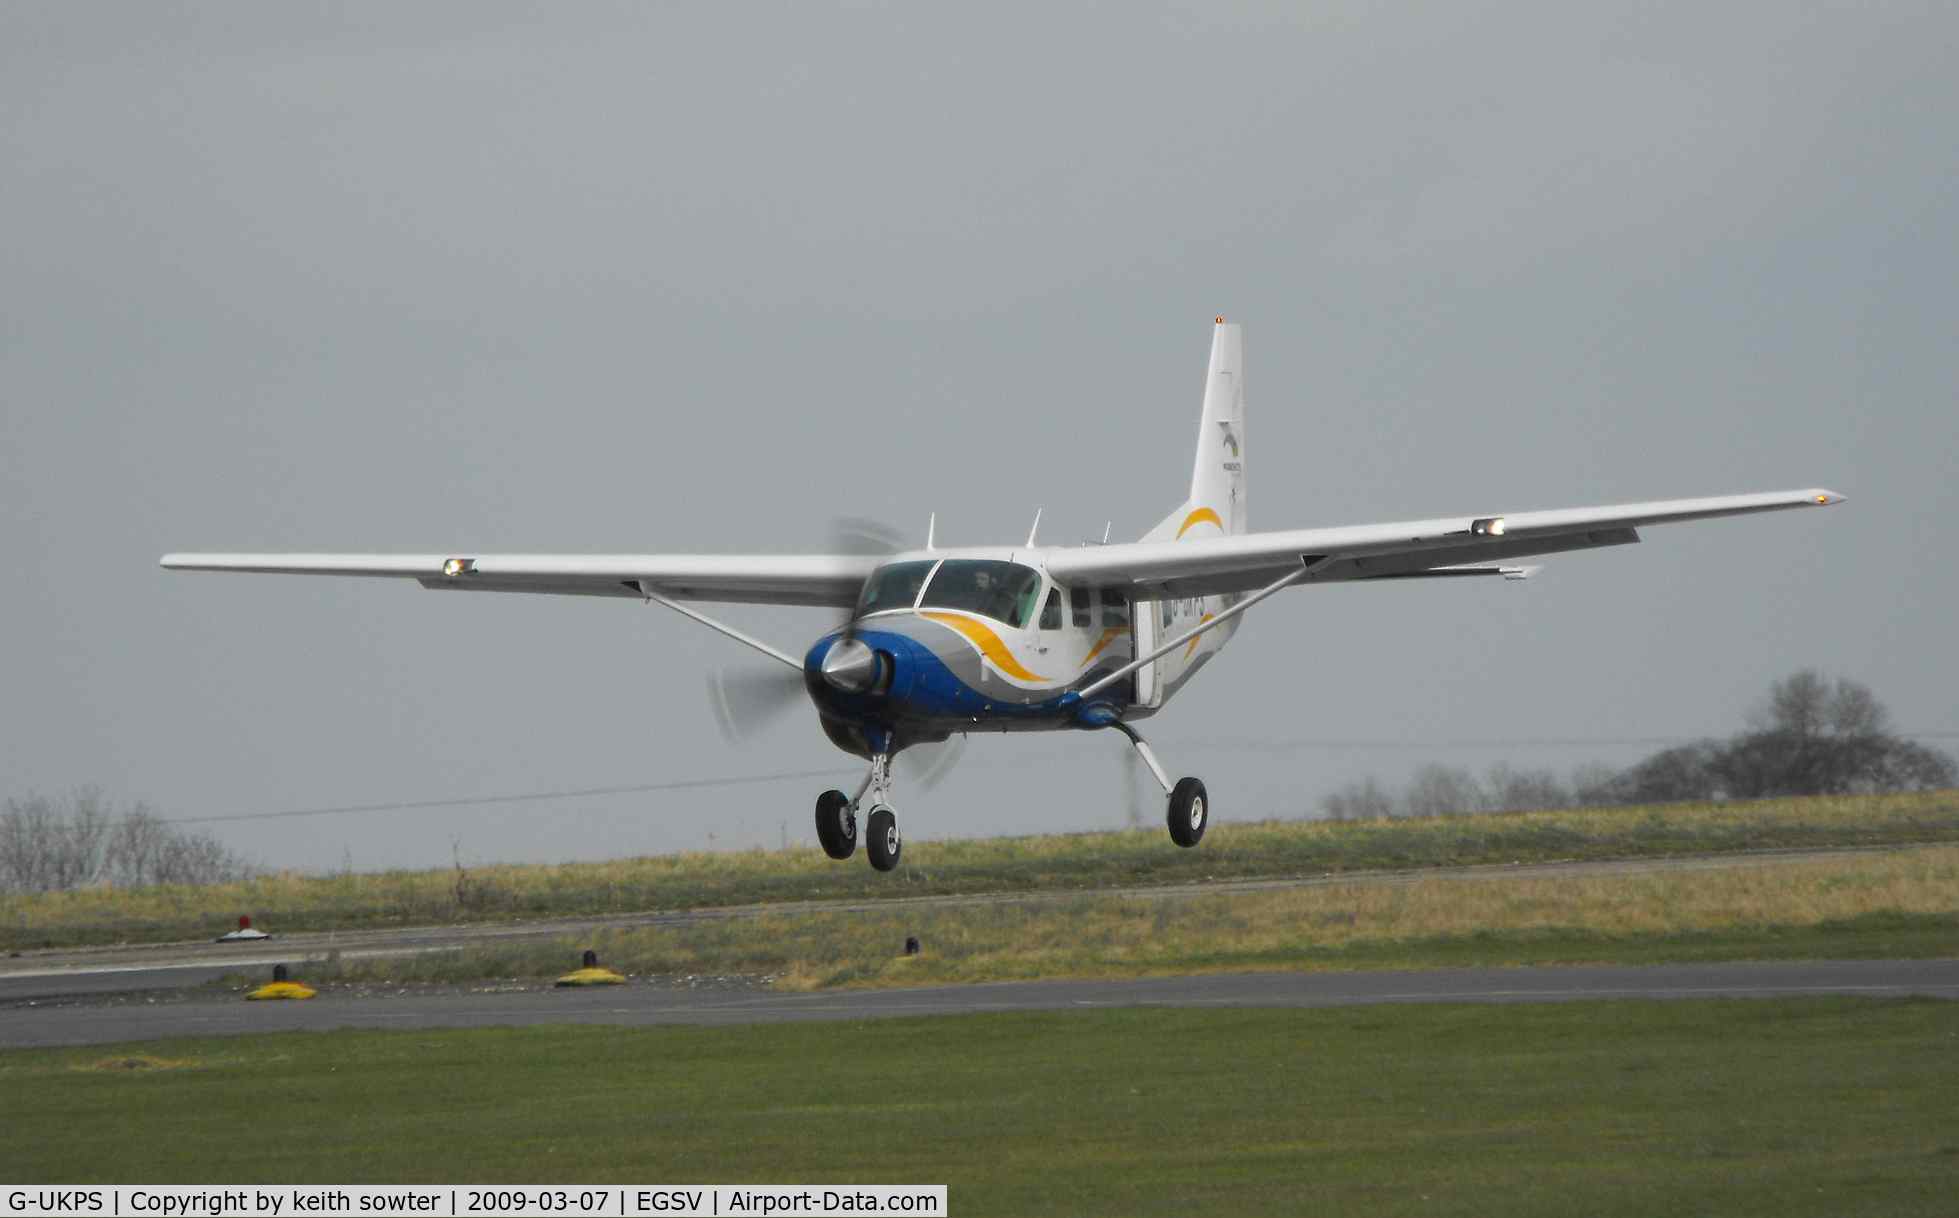 G-UKPS, 2007 Cessna 208 Caravan 1 C/N 20800423, Touching down after releasing more sky divers